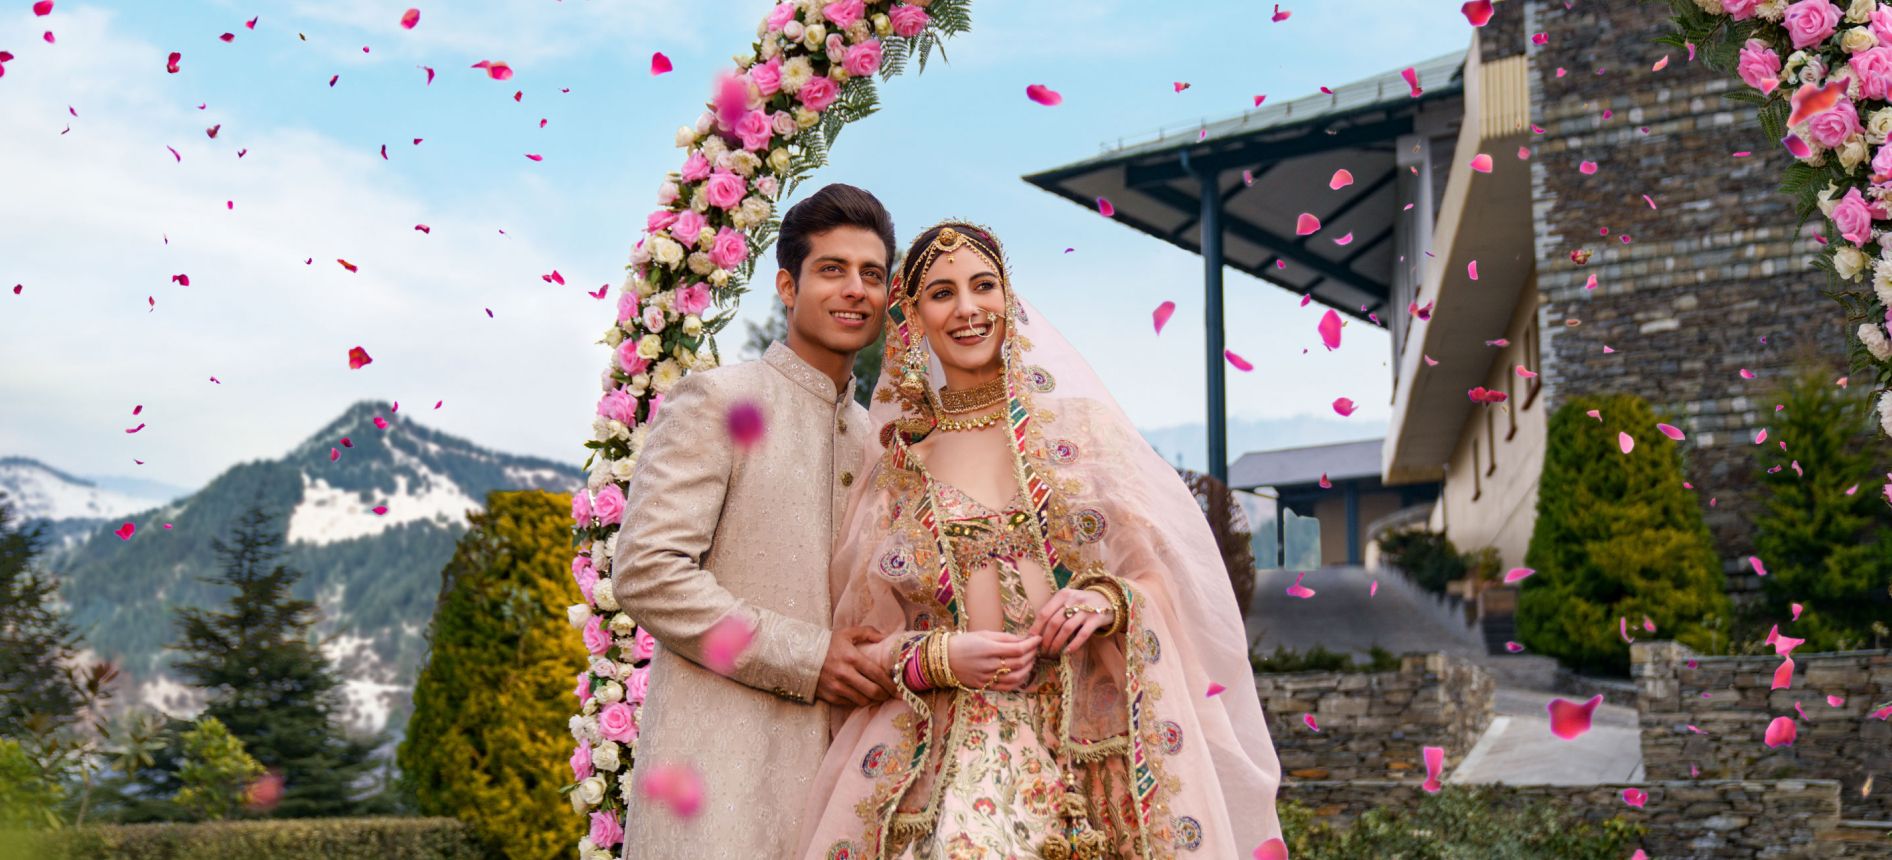 Mountain Wedding Vows - Luxury Wedding at Taj hotels